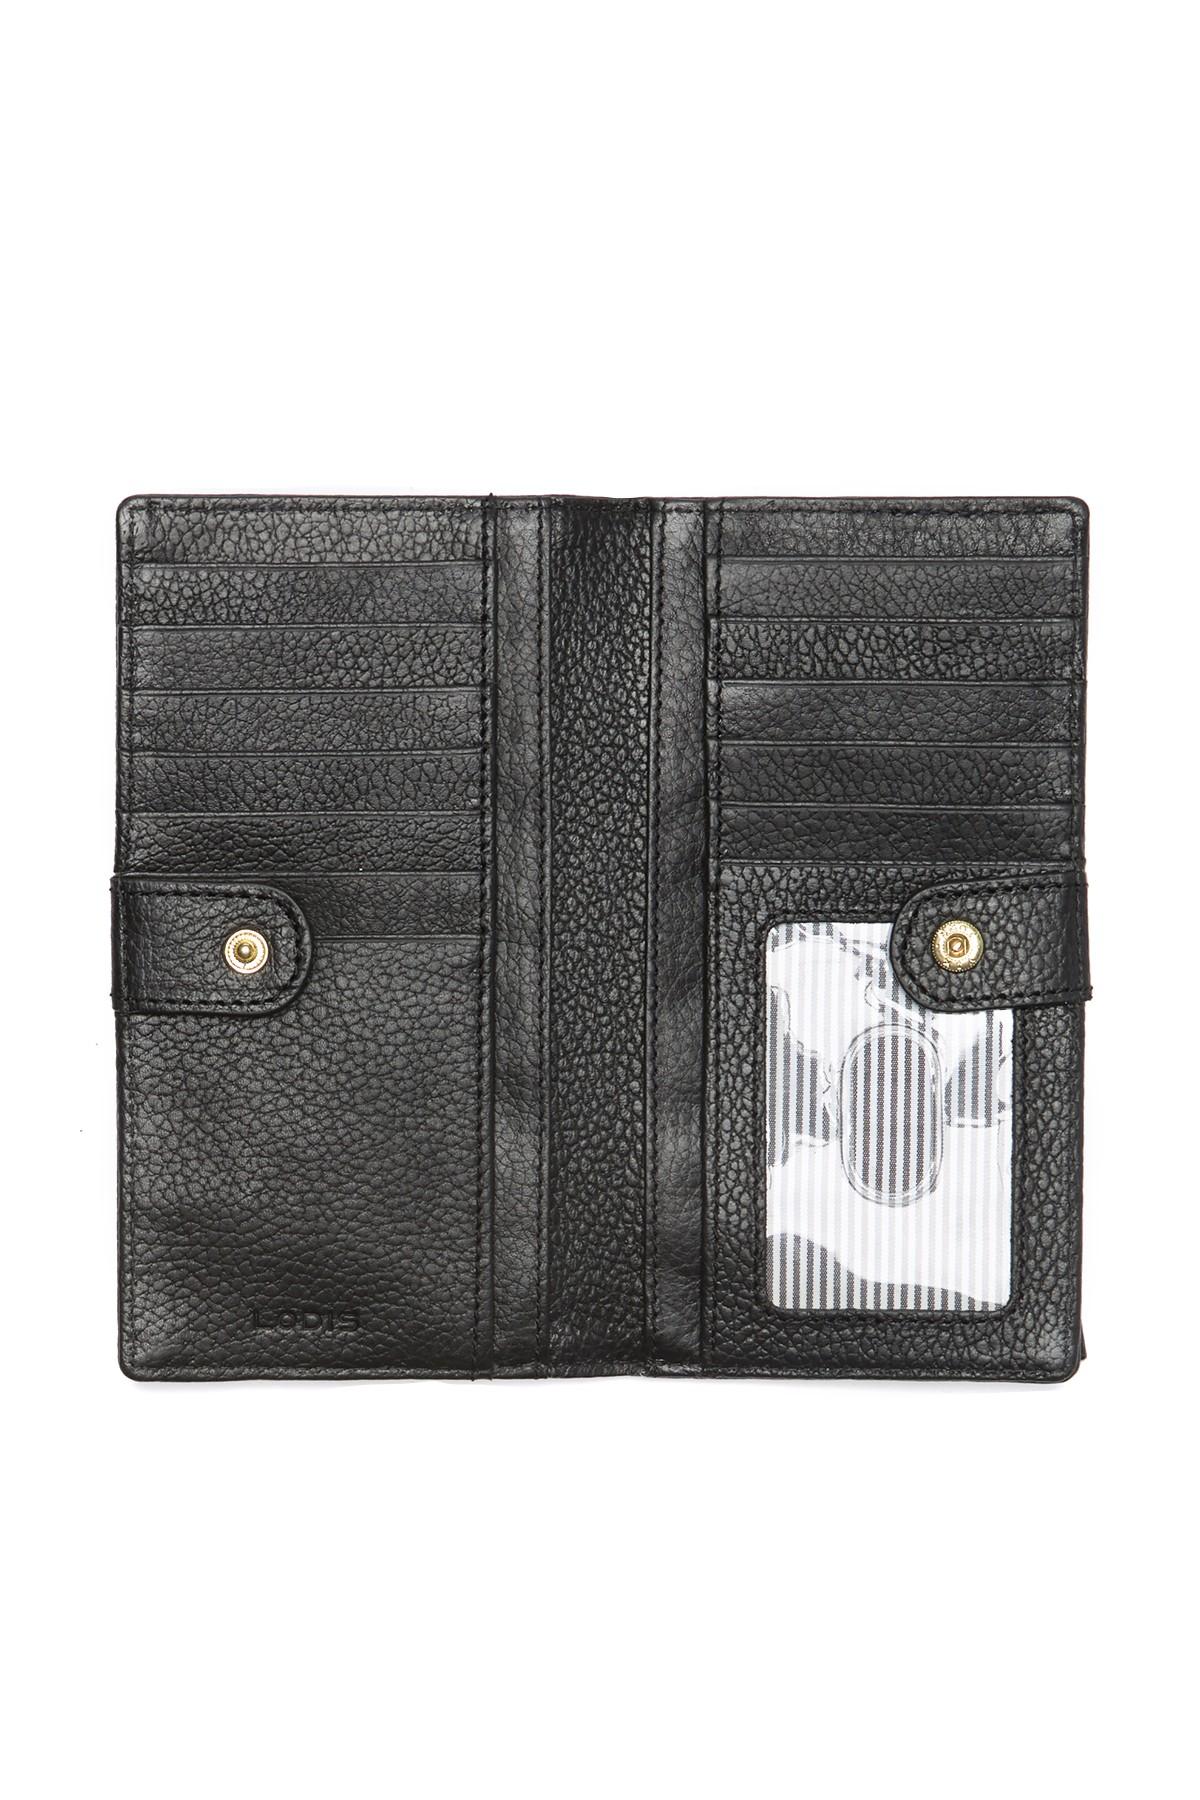 Lodis Slim Leather Wallet in Black - Lyst